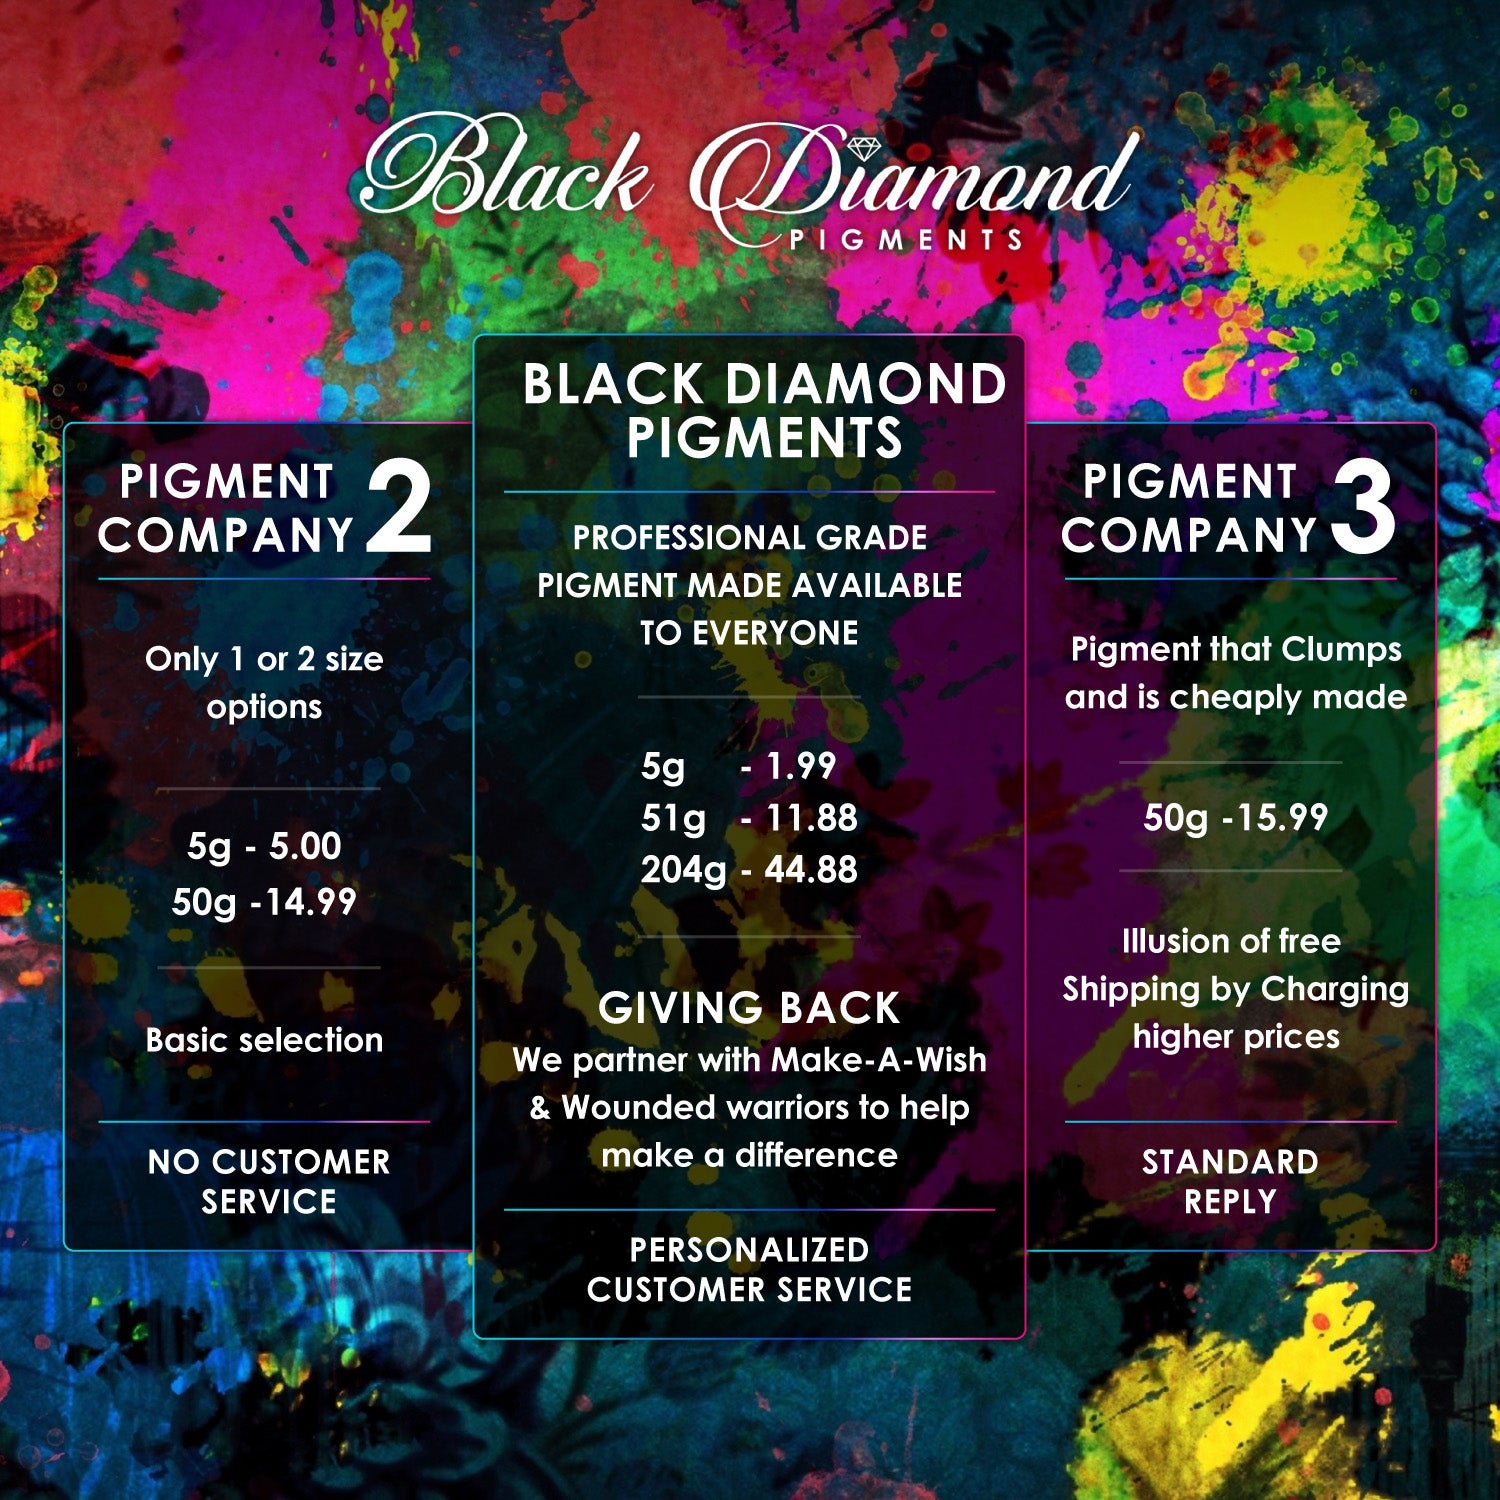 "ROMAN GOLD" Black Diamond Pigments